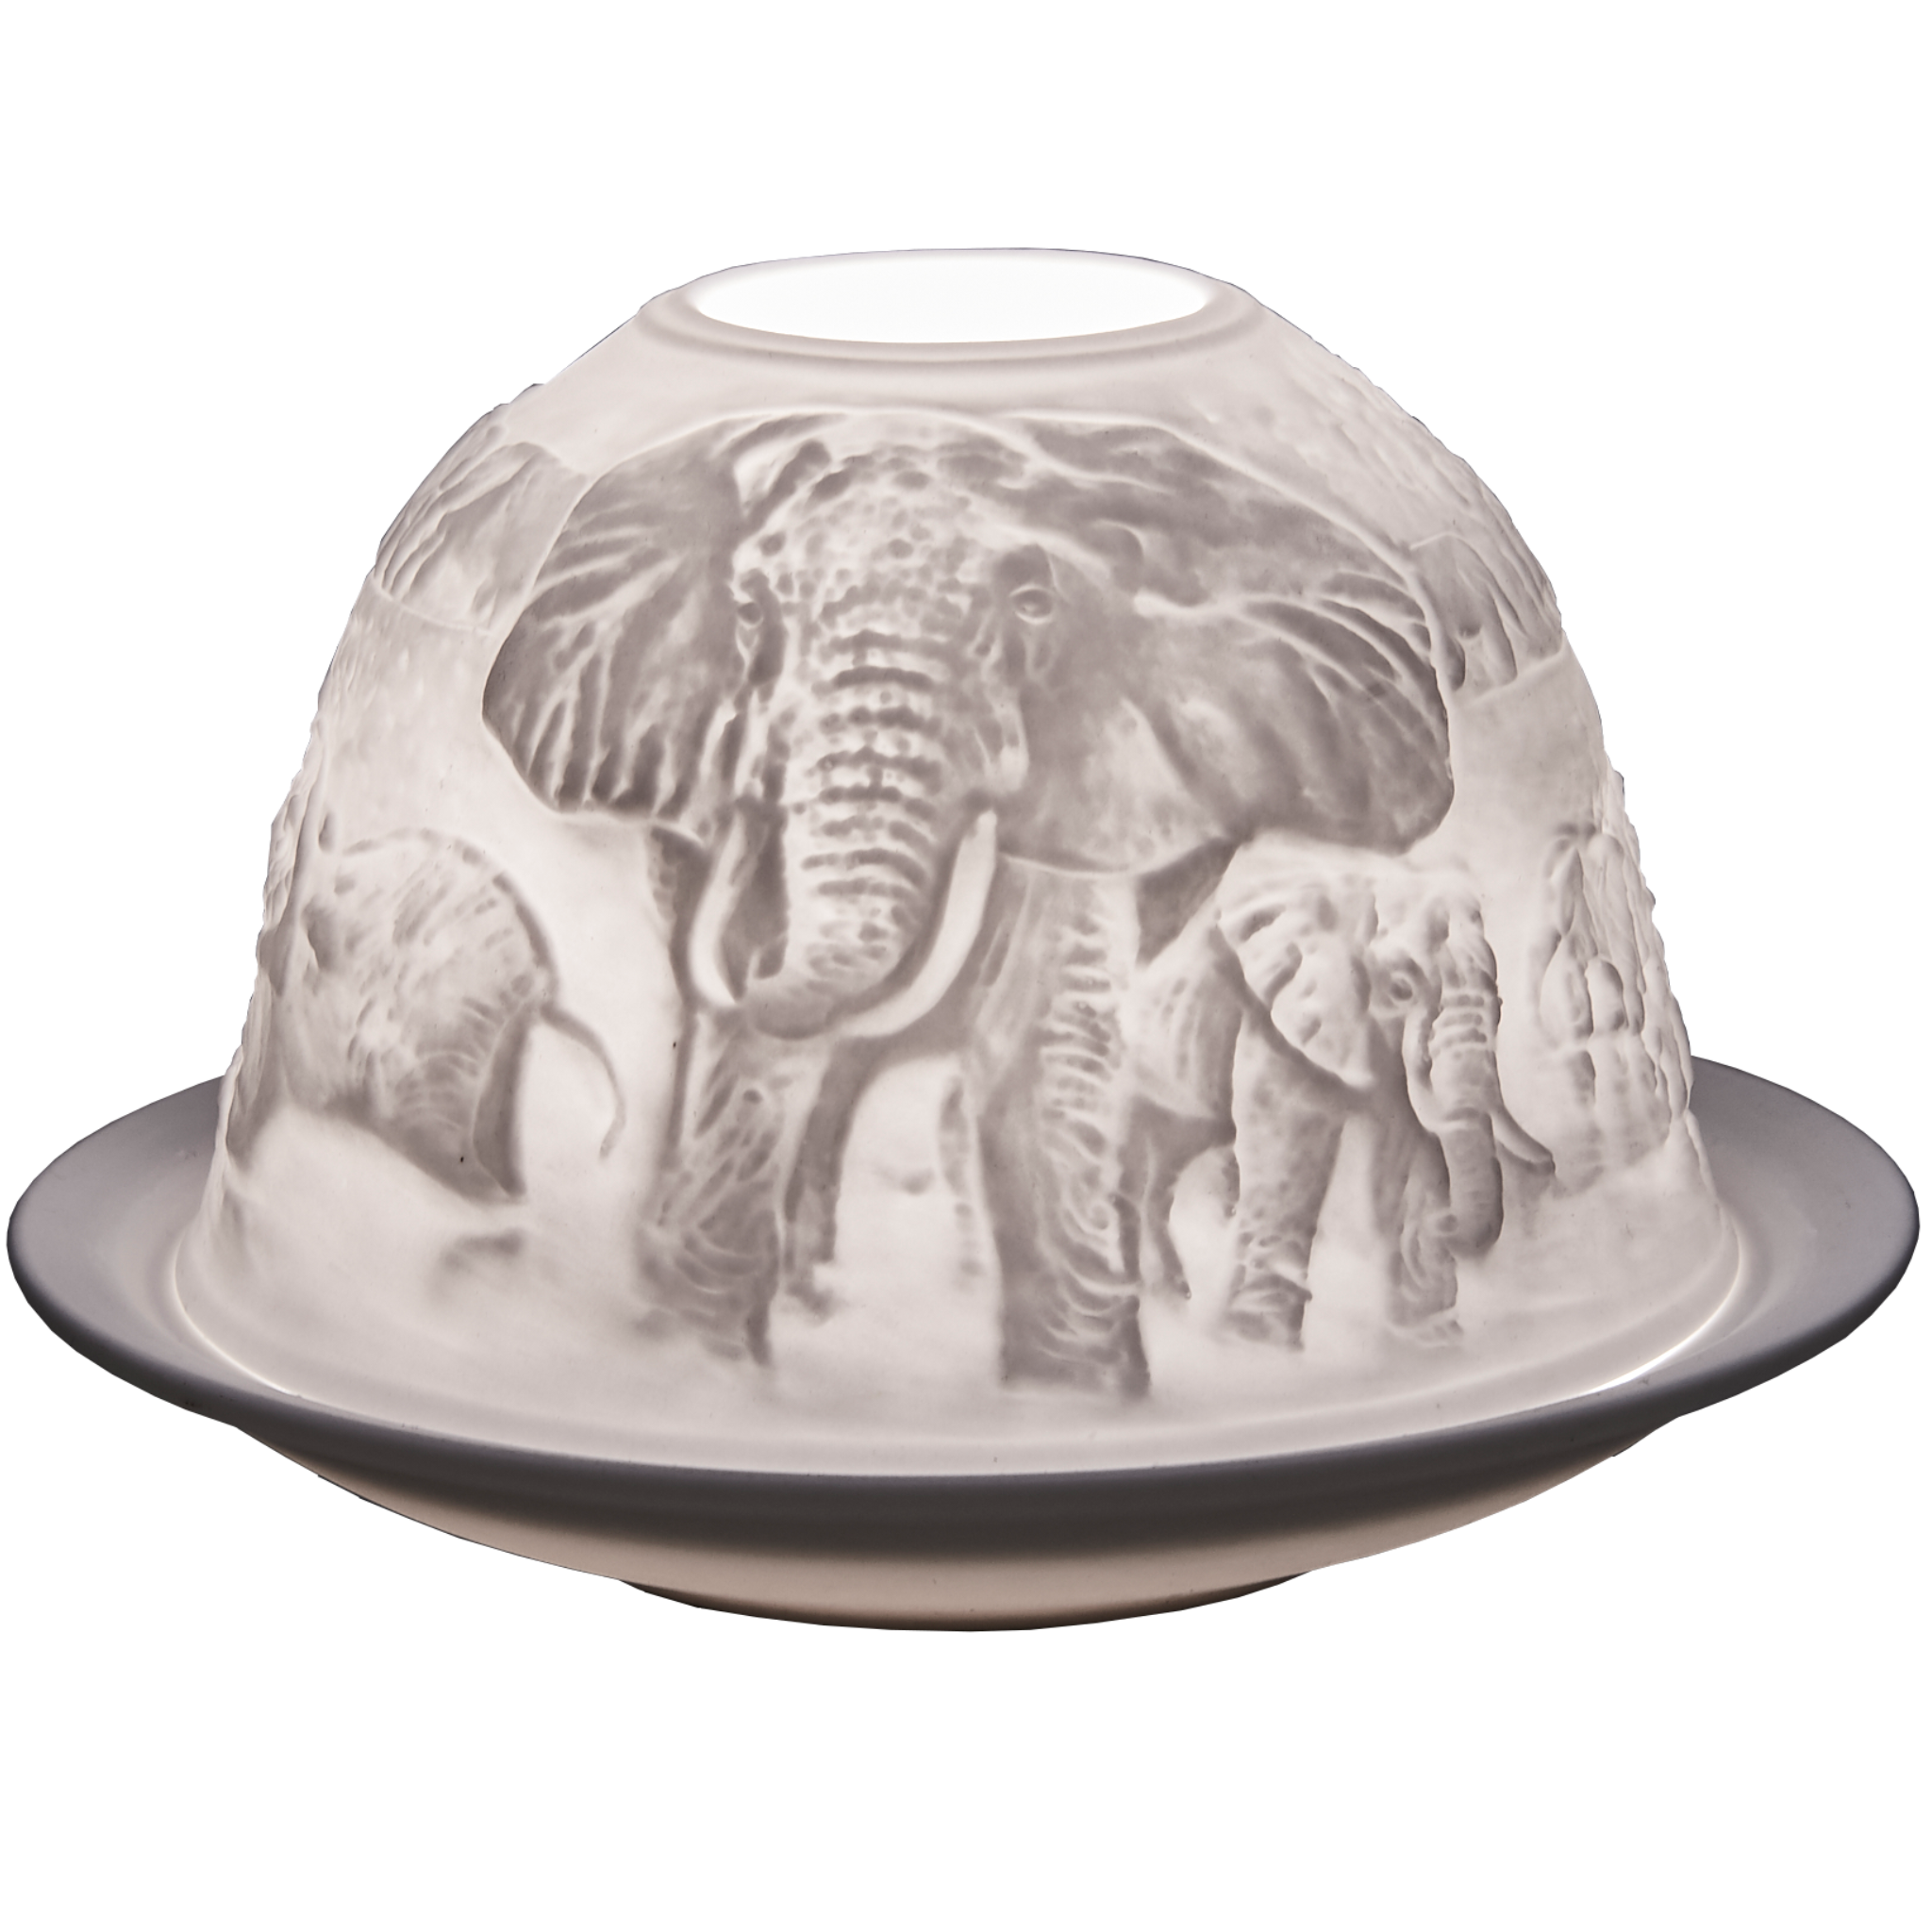 SALE Elephants Domelights Pack of 6